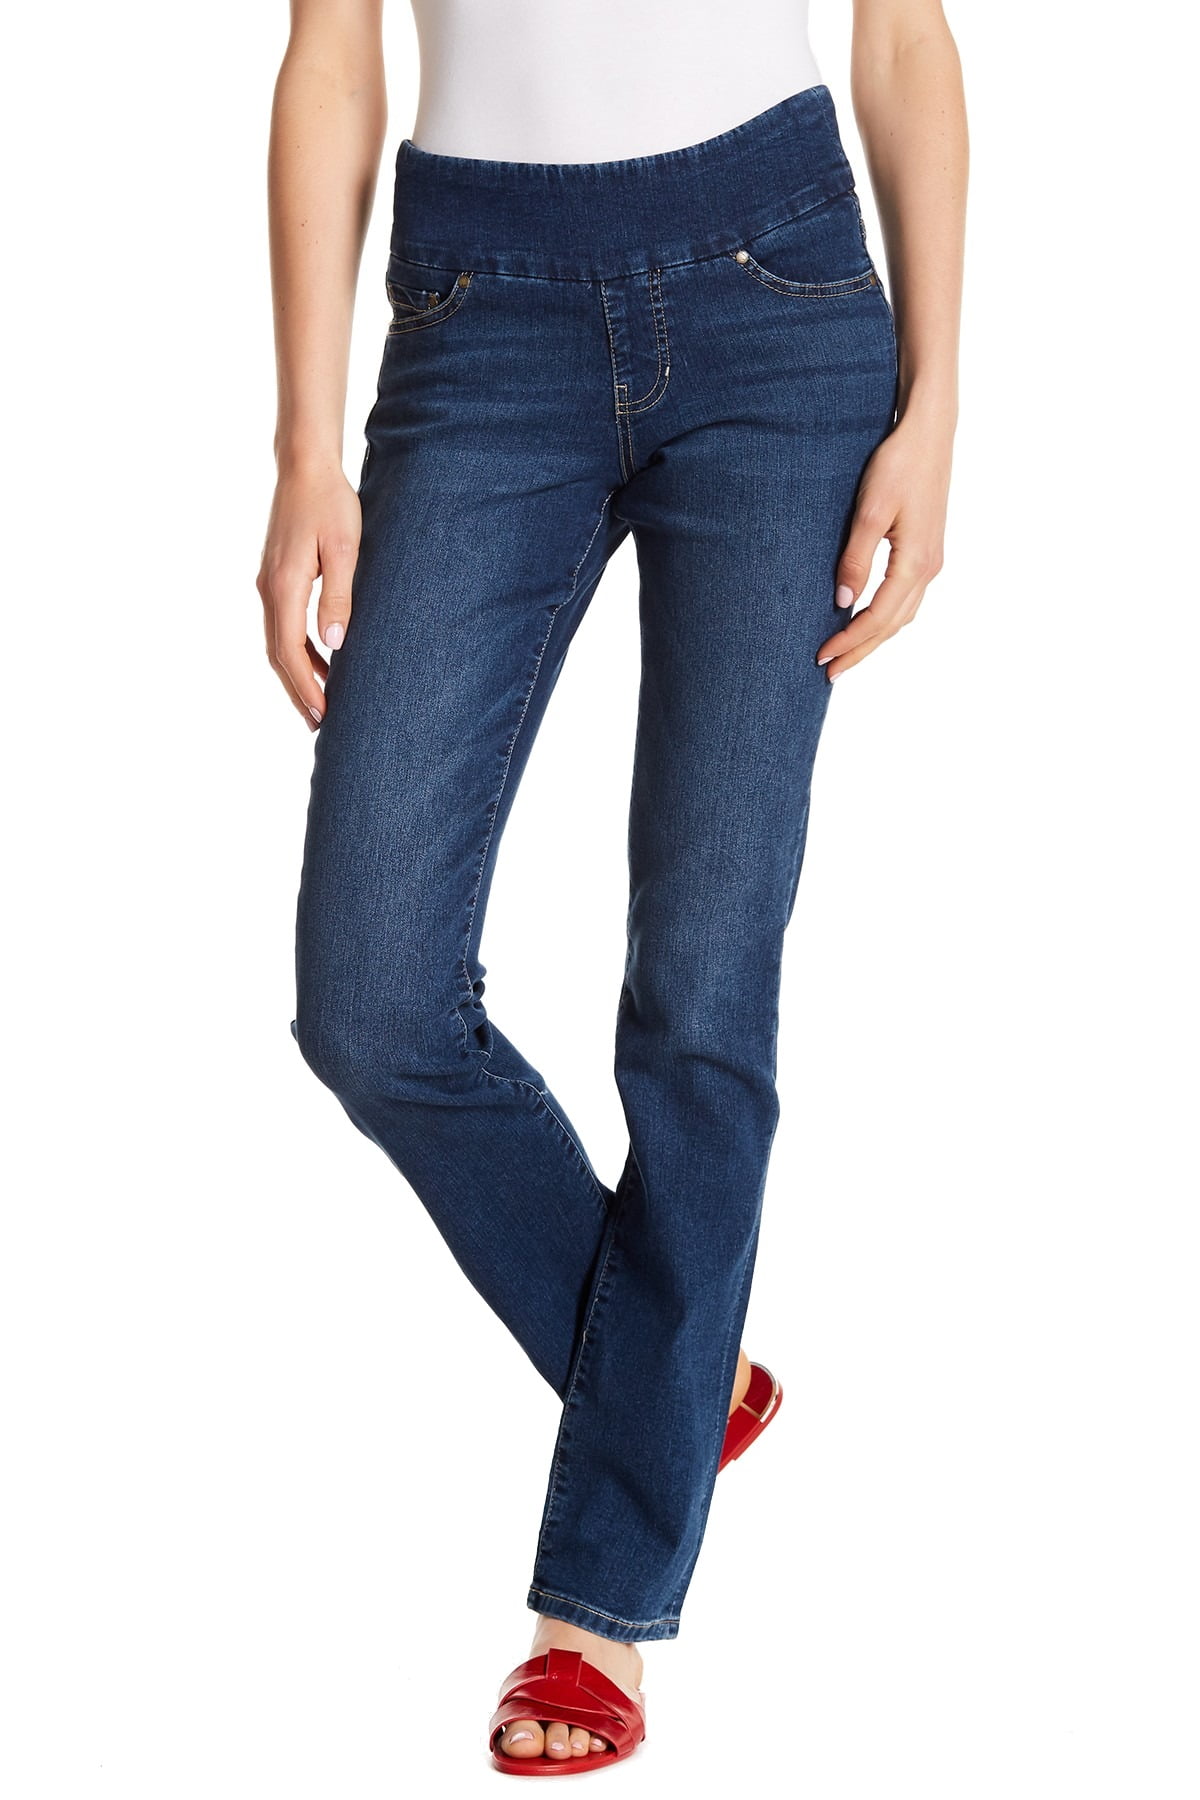 JAG Jeans - Womens Pull-On High-Rise Straight-Leg Jeans 8 - Walmart.com ...